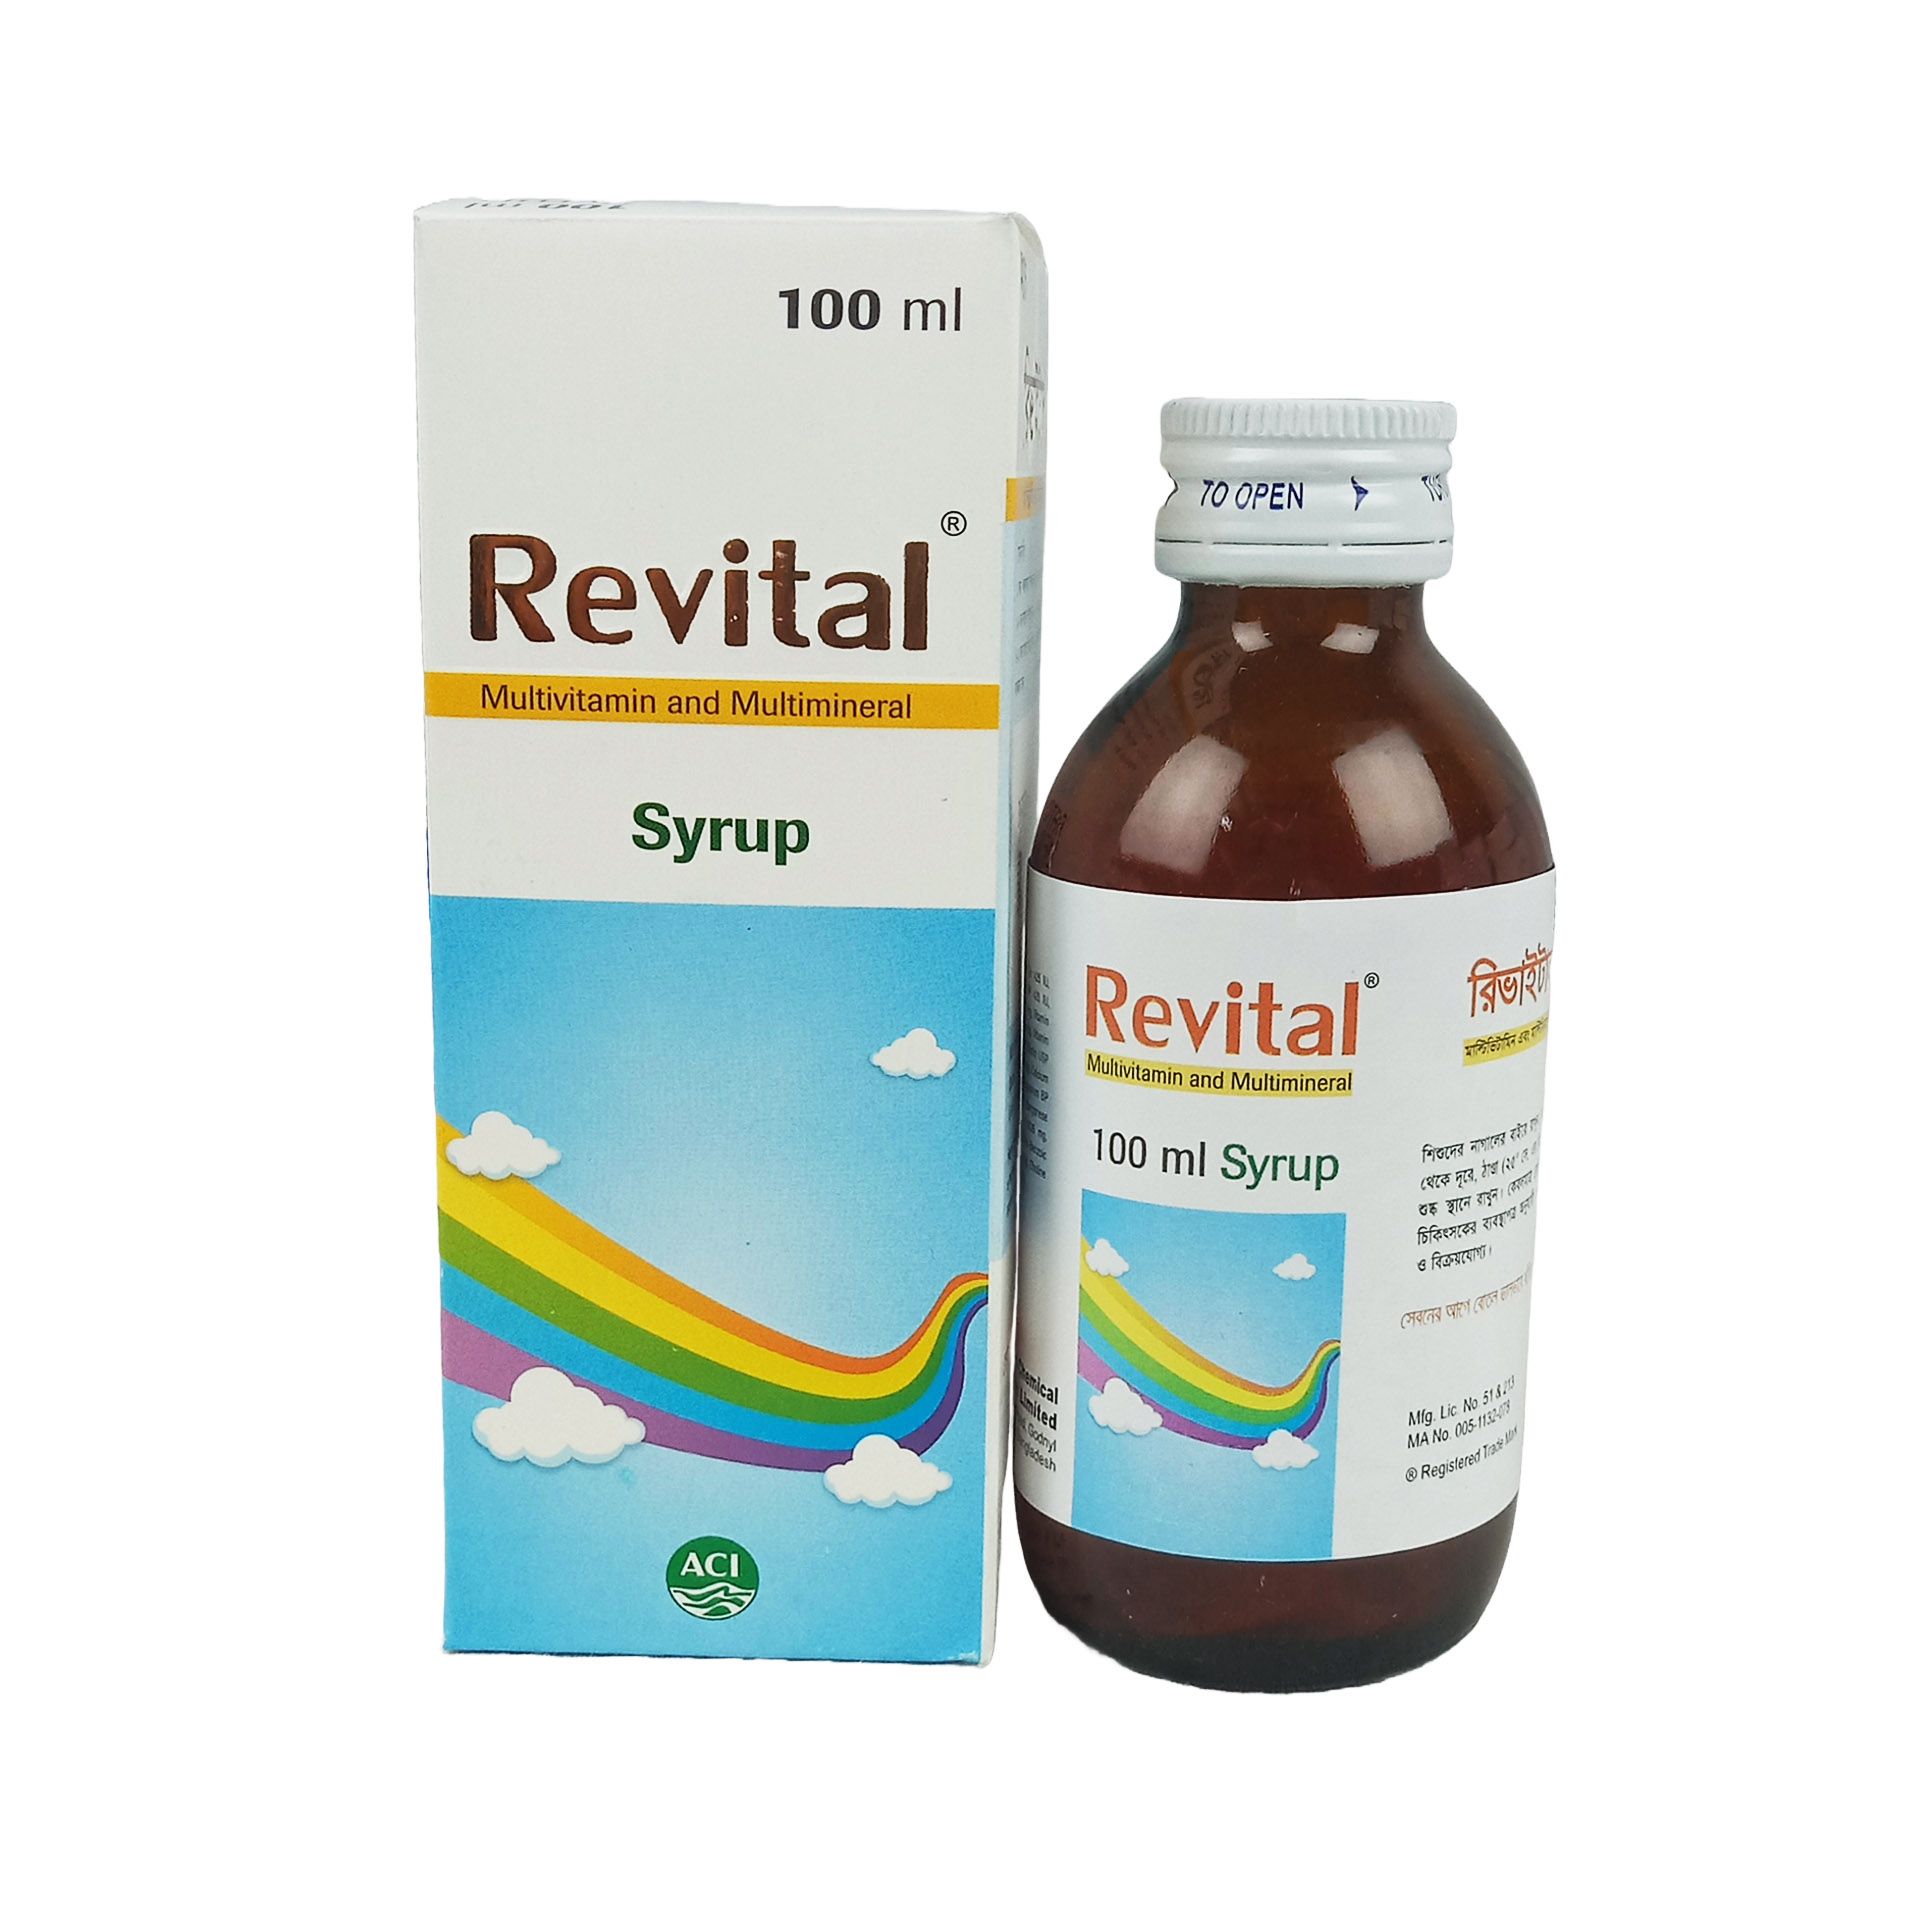 Revital 100ml Syrup